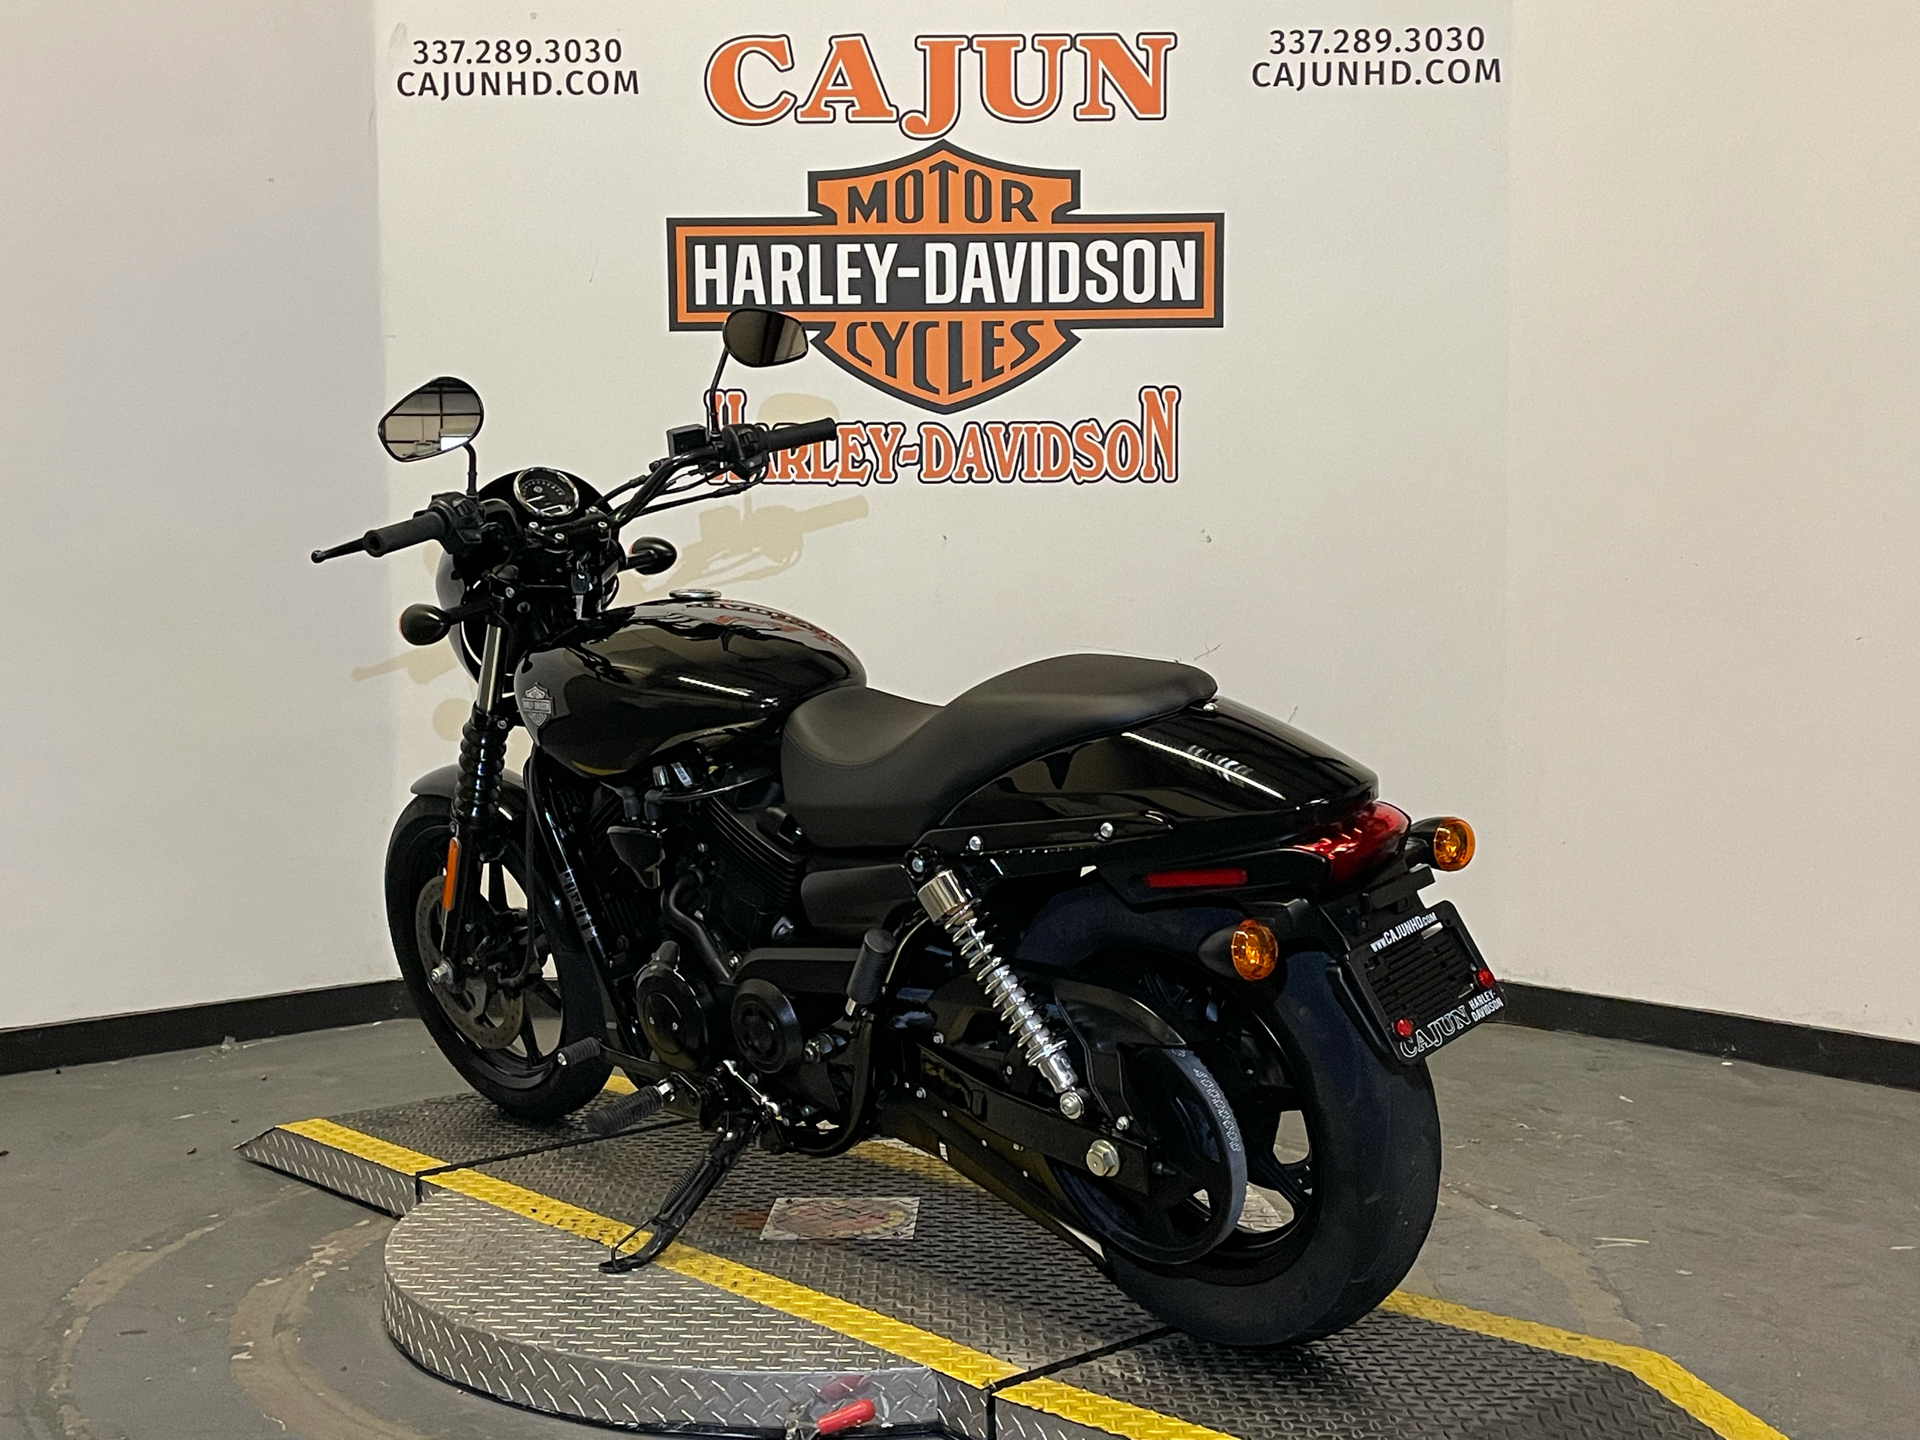 2018 Harley-Davidson Street near me - Photo 5